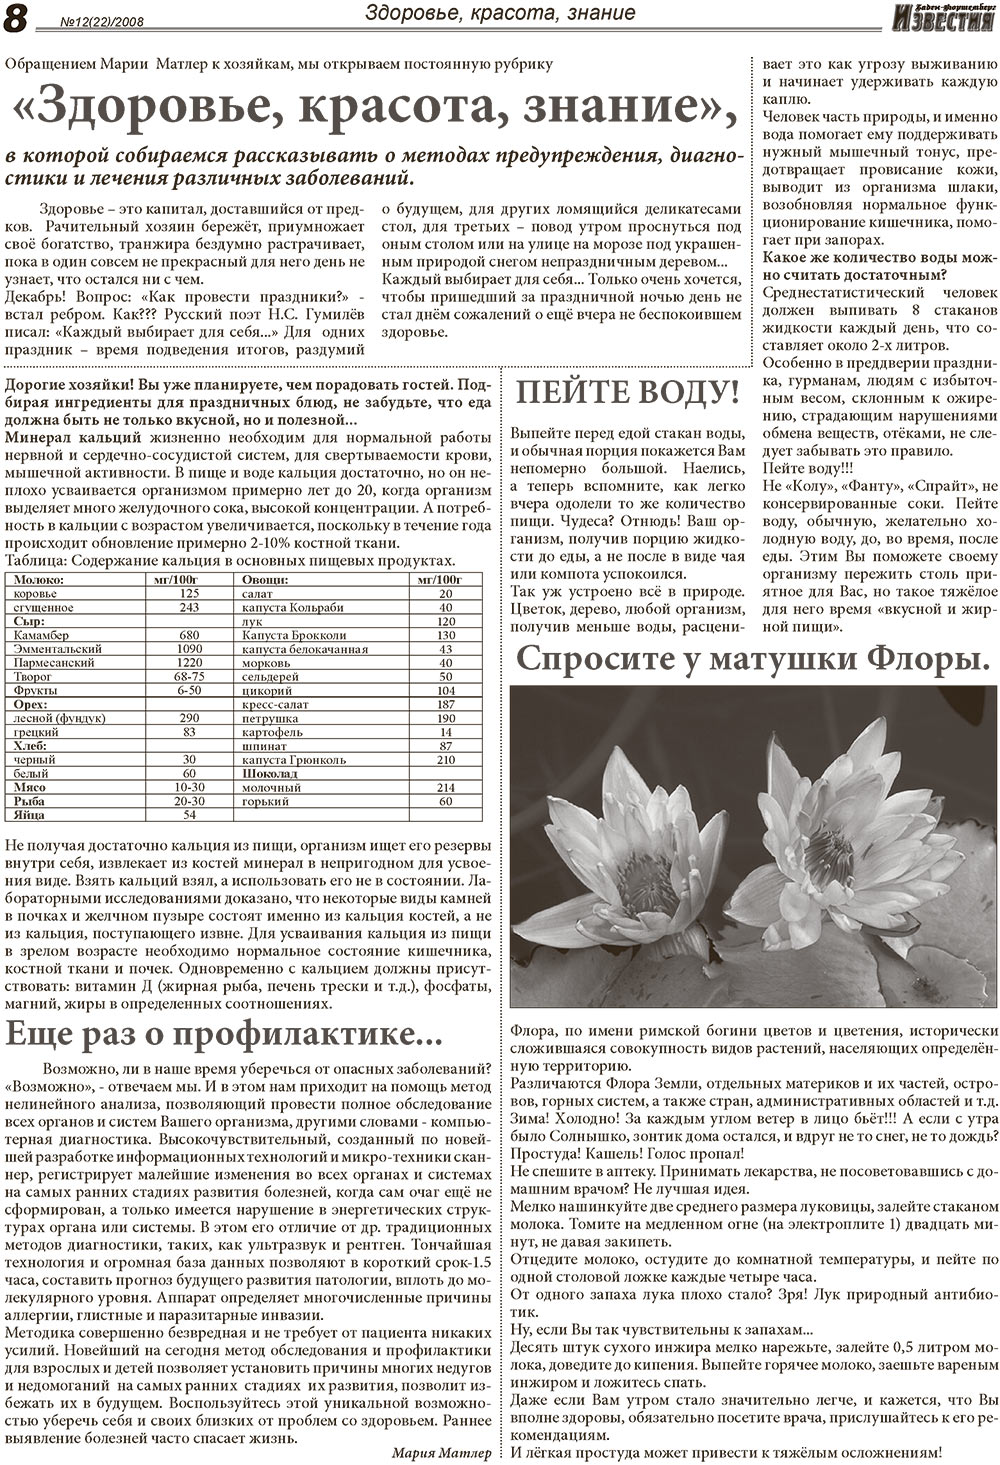 Известия BW (газета). 2008 год, номер 12, стр. 8